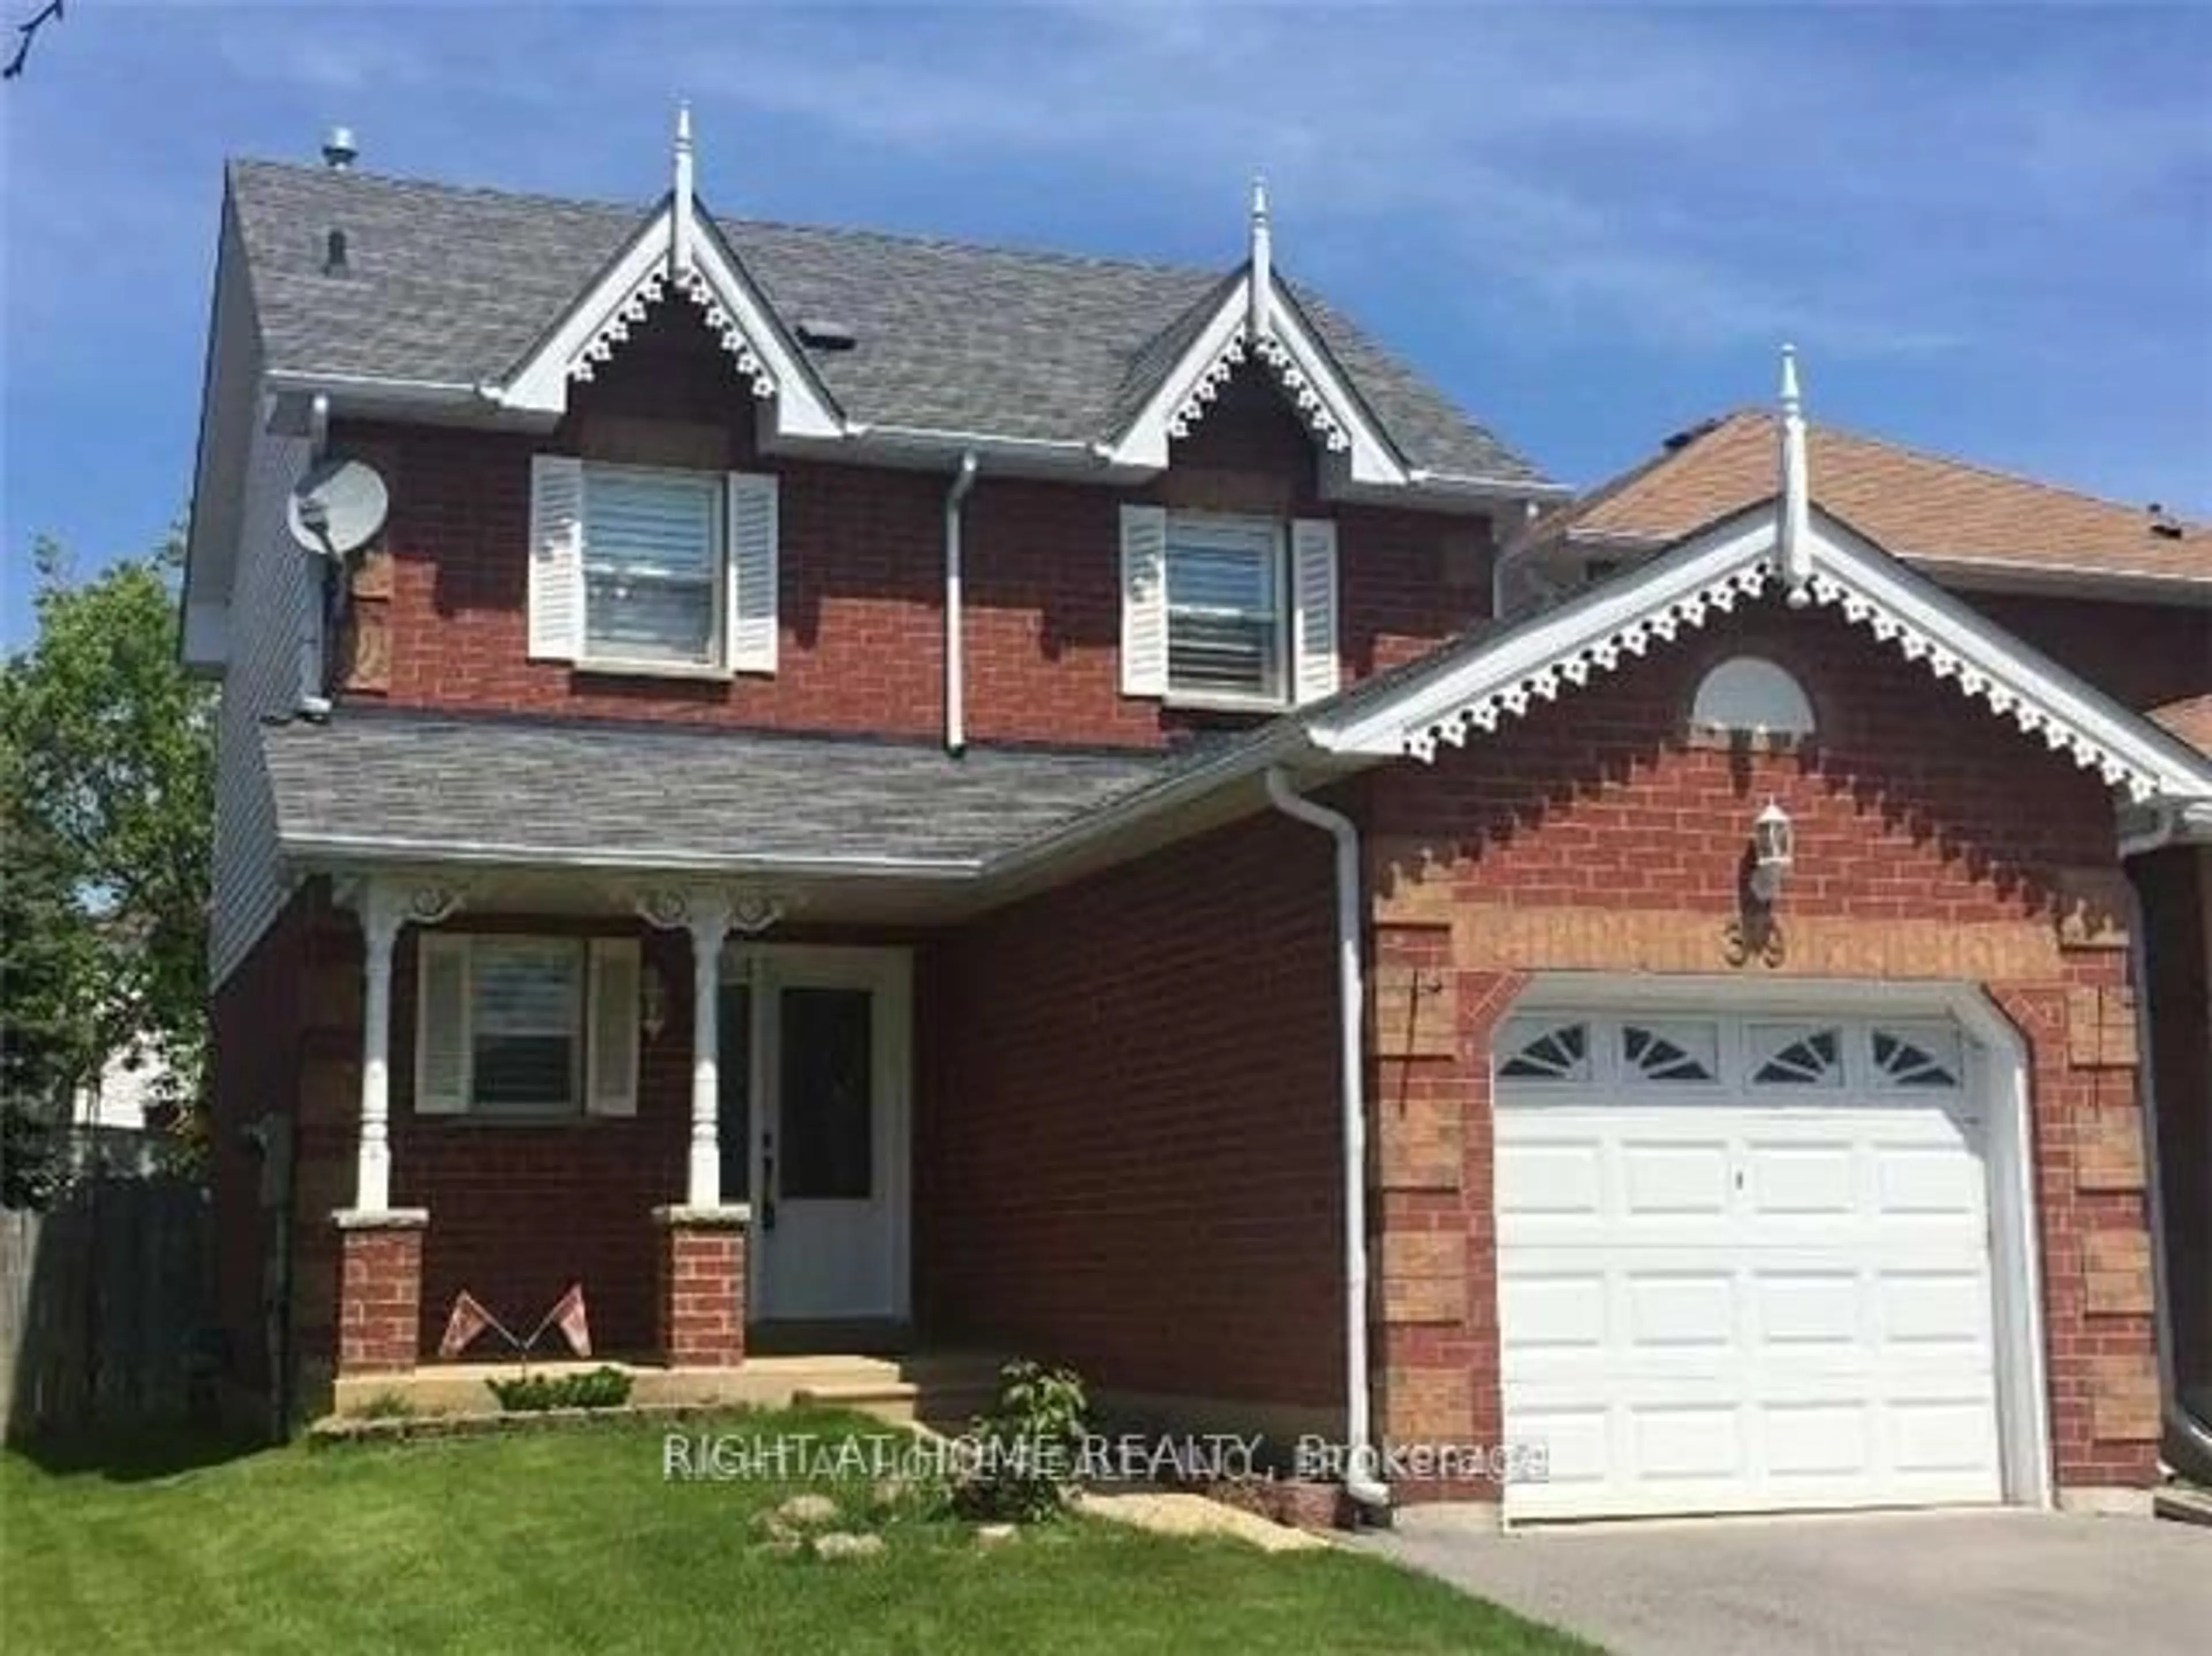 Home with brick exterior material for 39 Glanville Cres, Clarington Ontario L1C 4L7